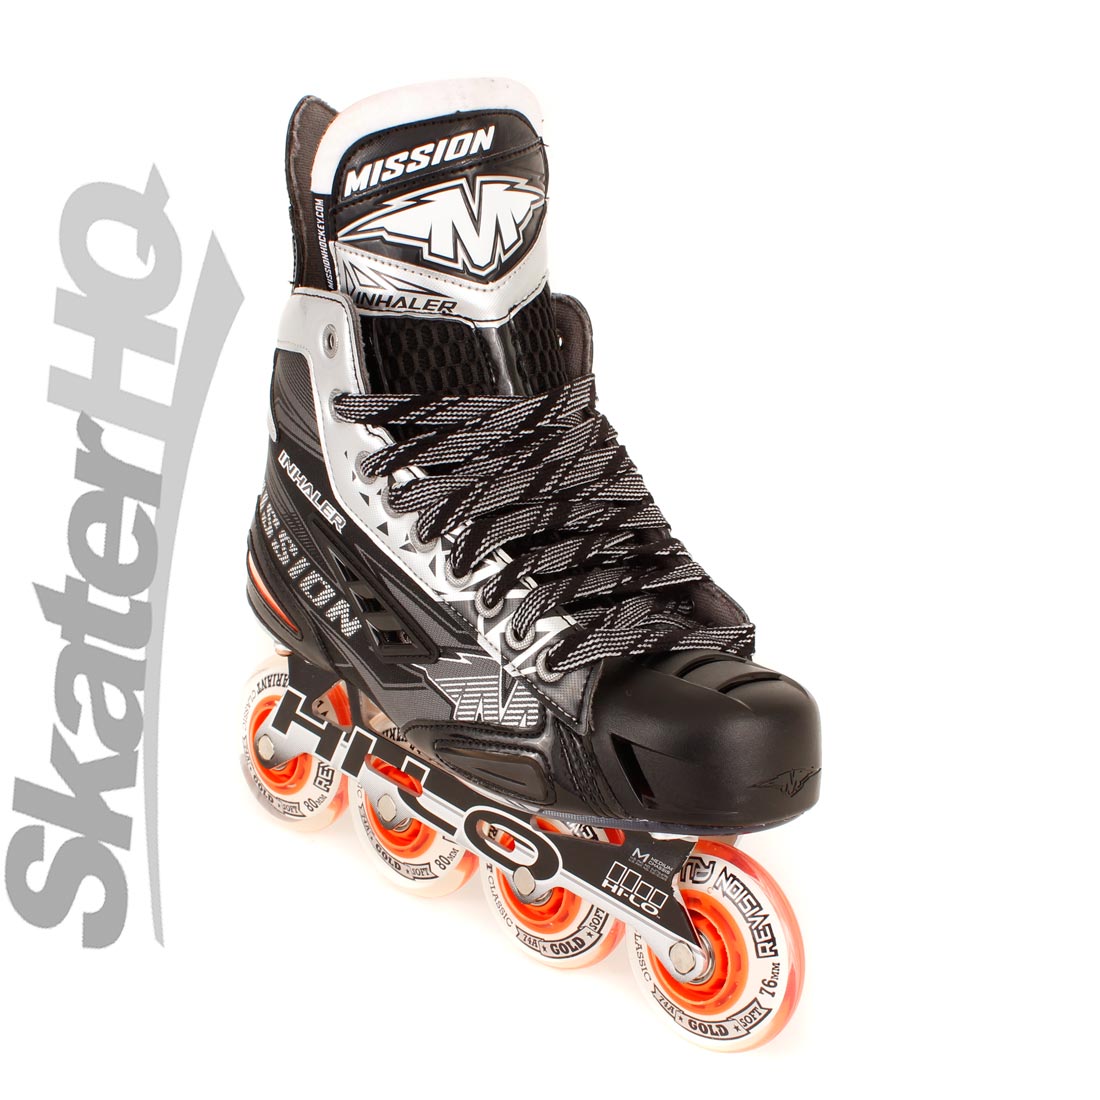 Mission Inhaler NLS3 Skate - 6US Inline Hockey Skates